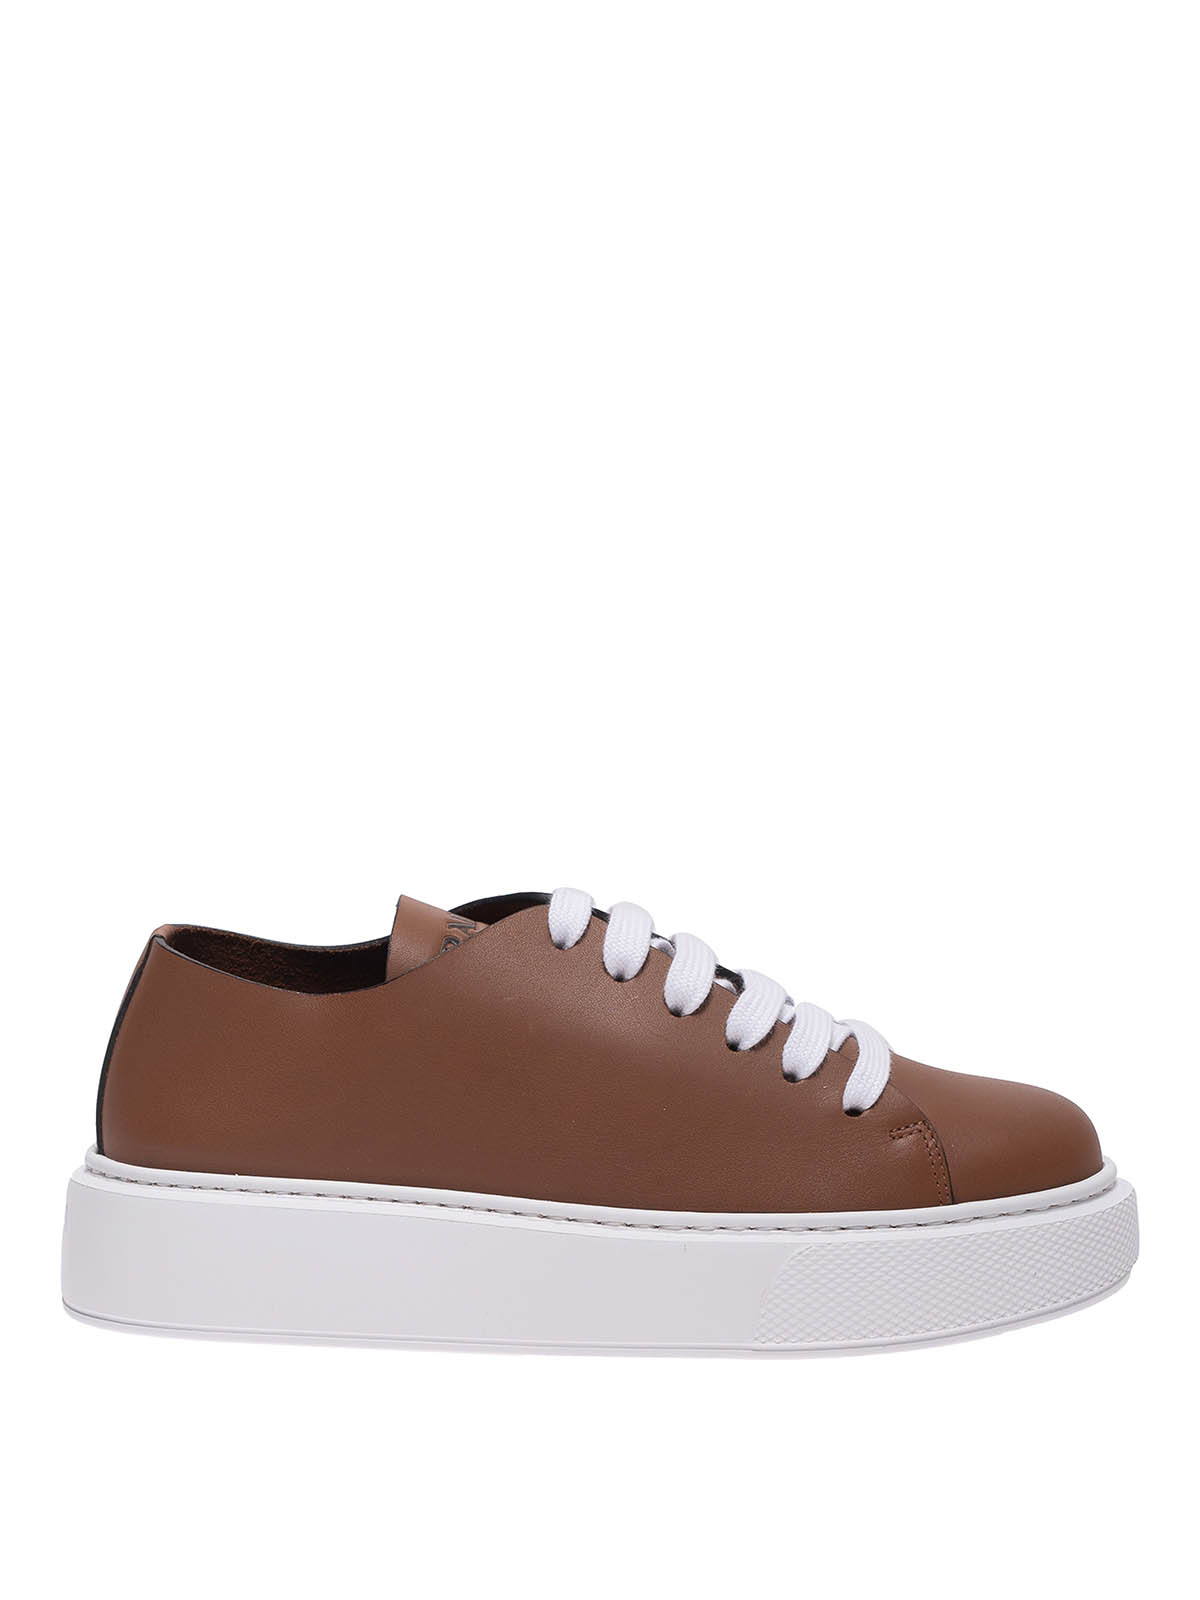 Prada Leather Platform Sneakers In Brown | ModeSens